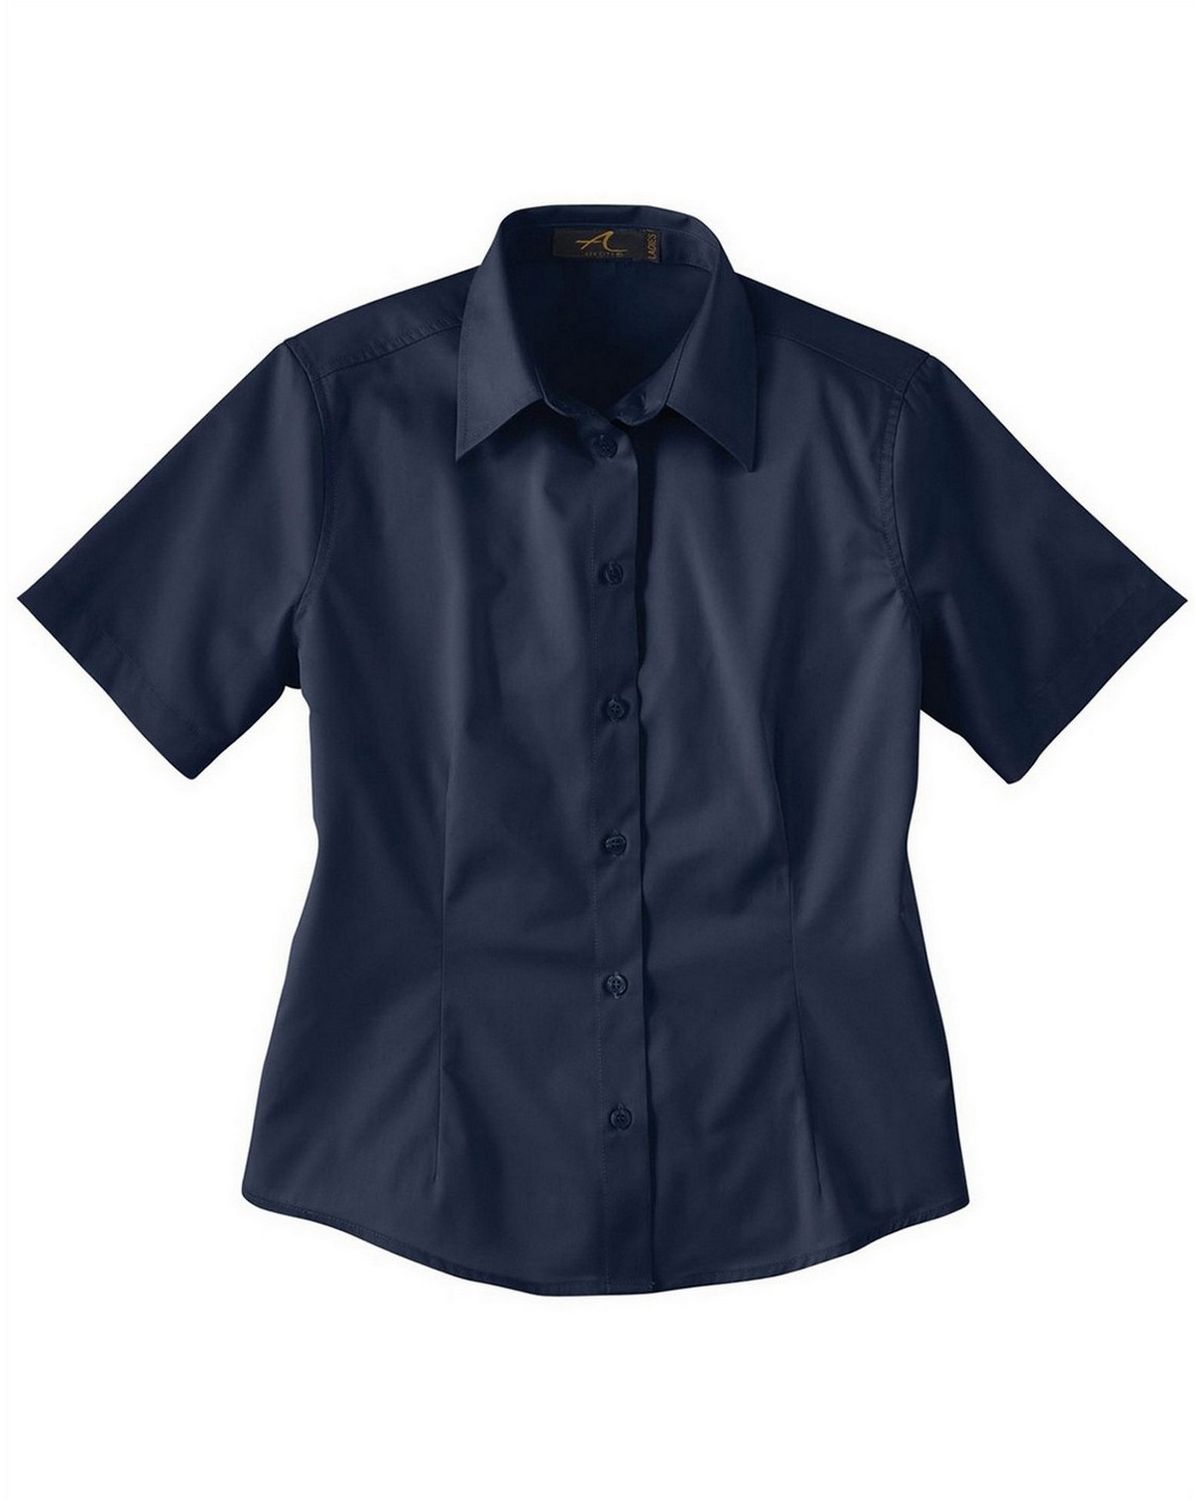 Buy Ash City 77010 Ladies' Short Sleeve Twill Shirt